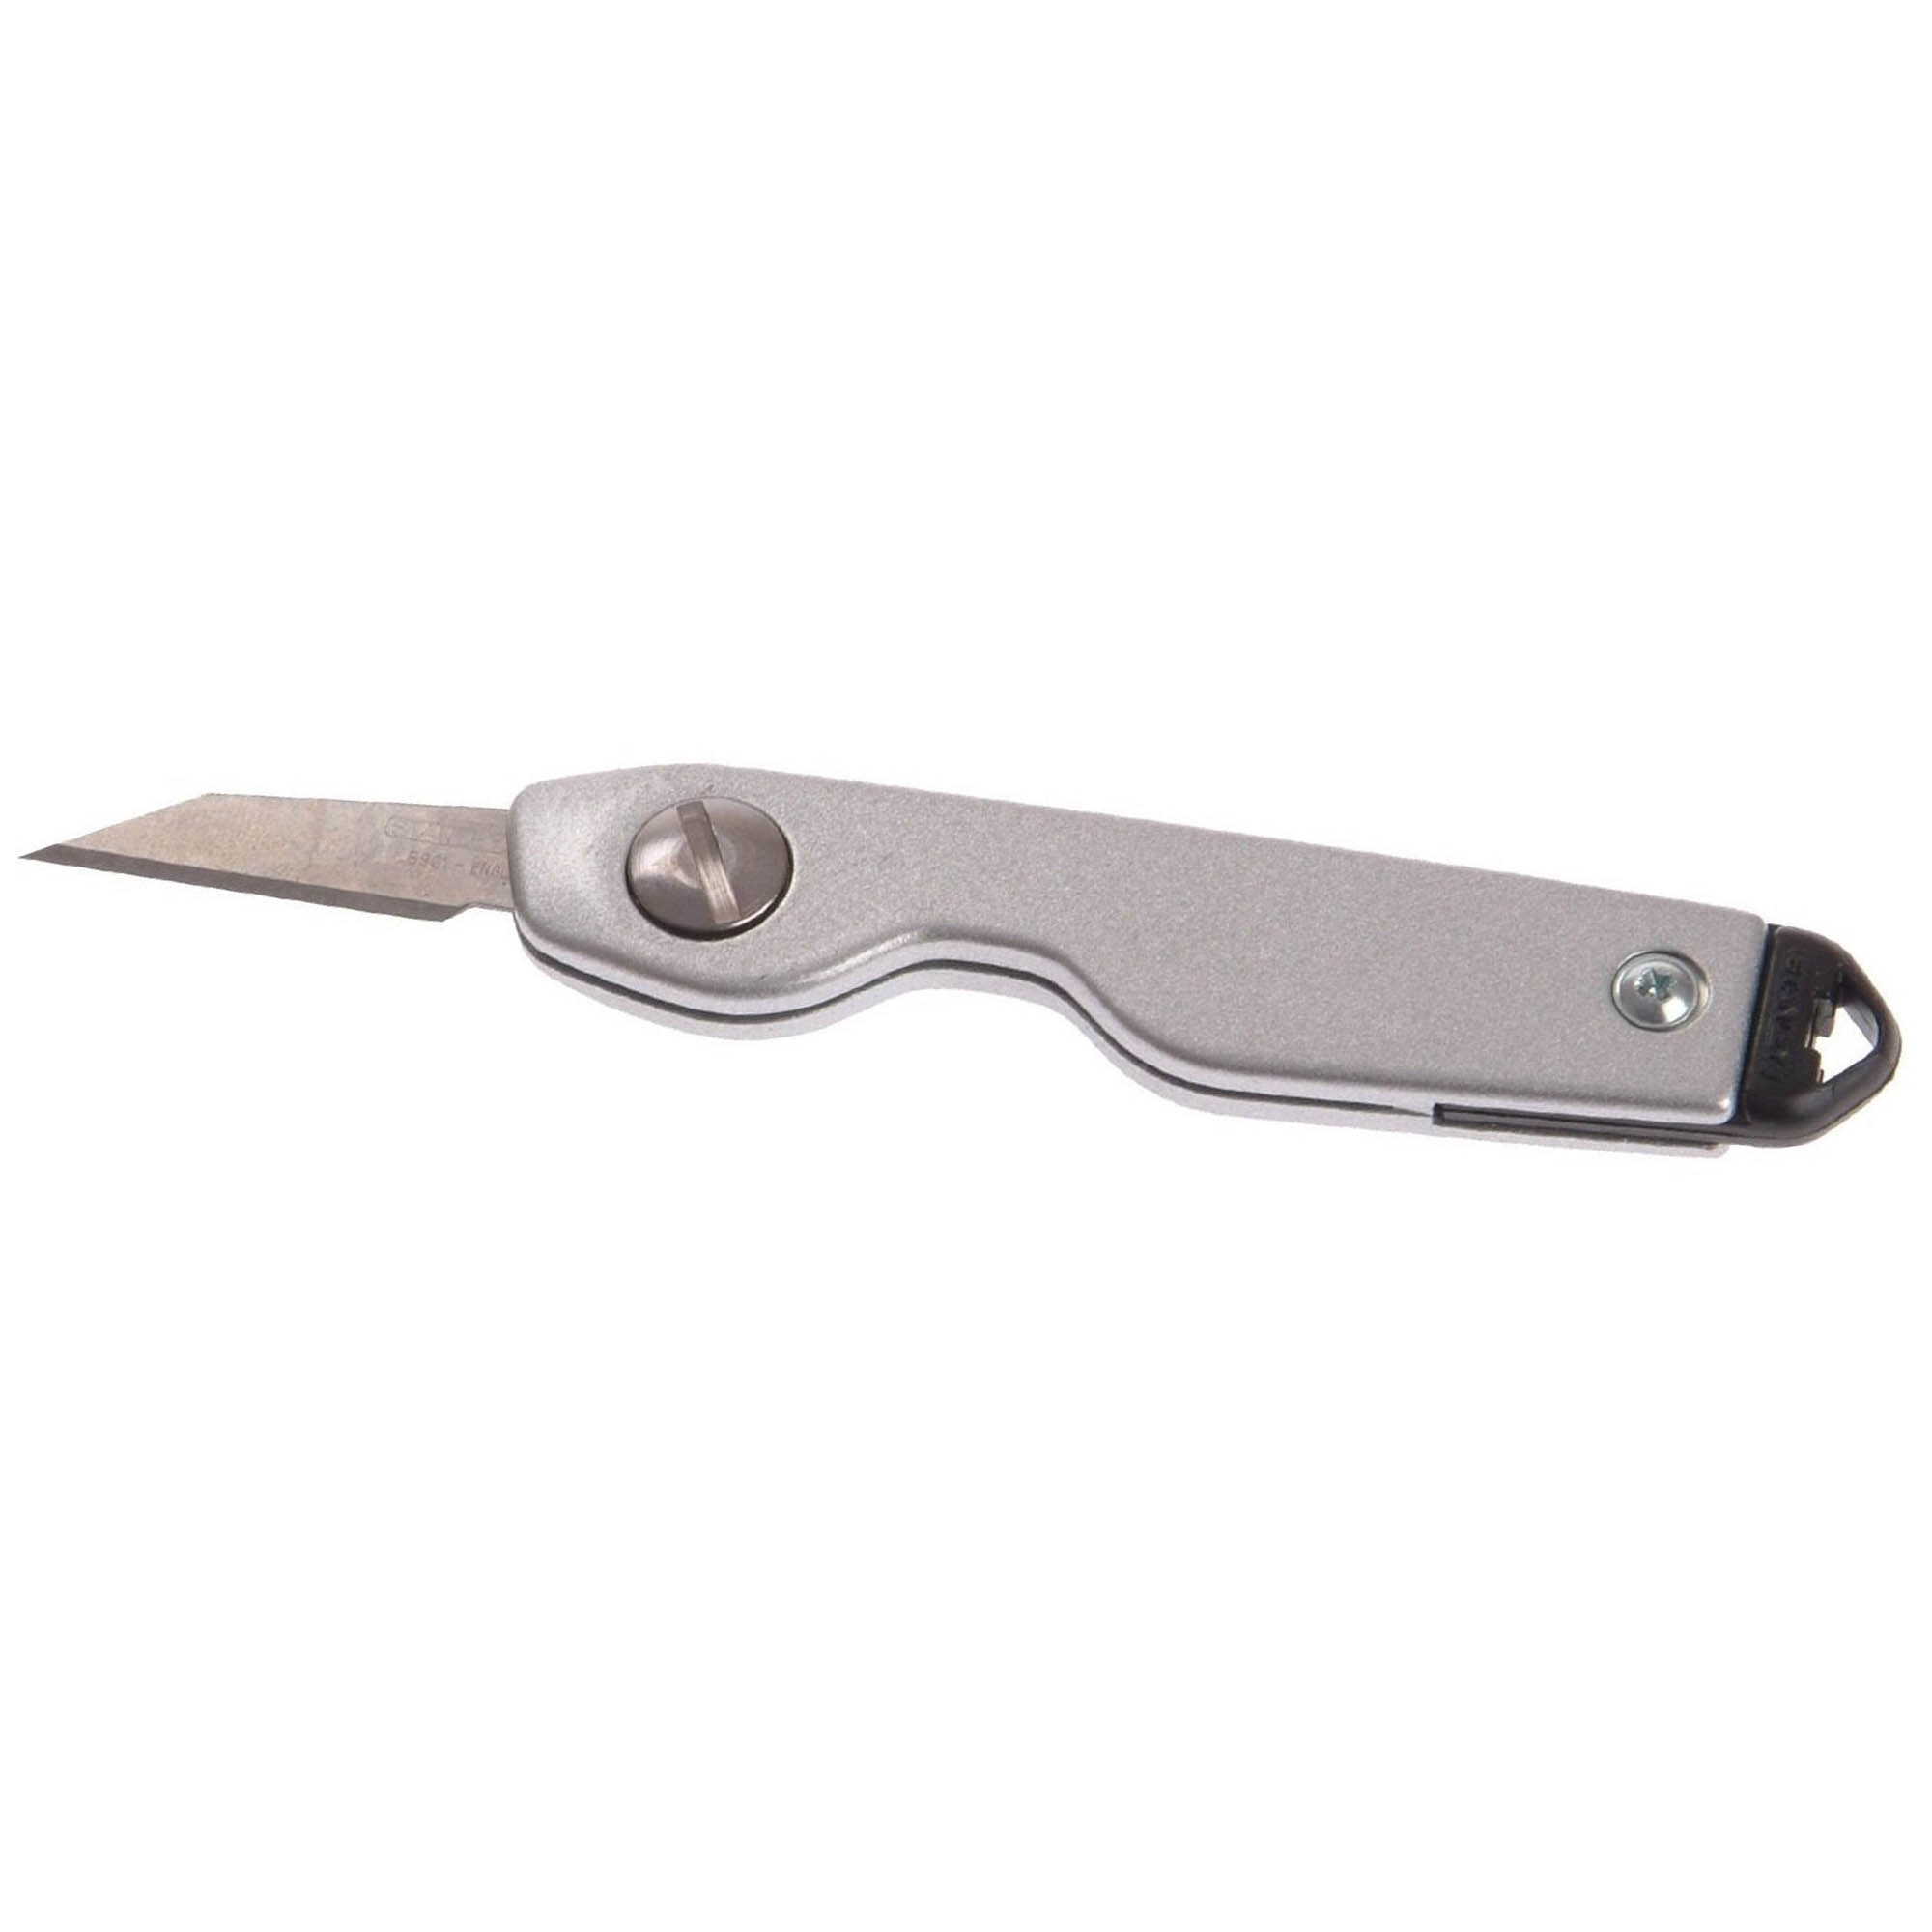 Buy 100 x Cruze Cutter Warehouse Ergonomic Safety Cutter Knives Box Openers